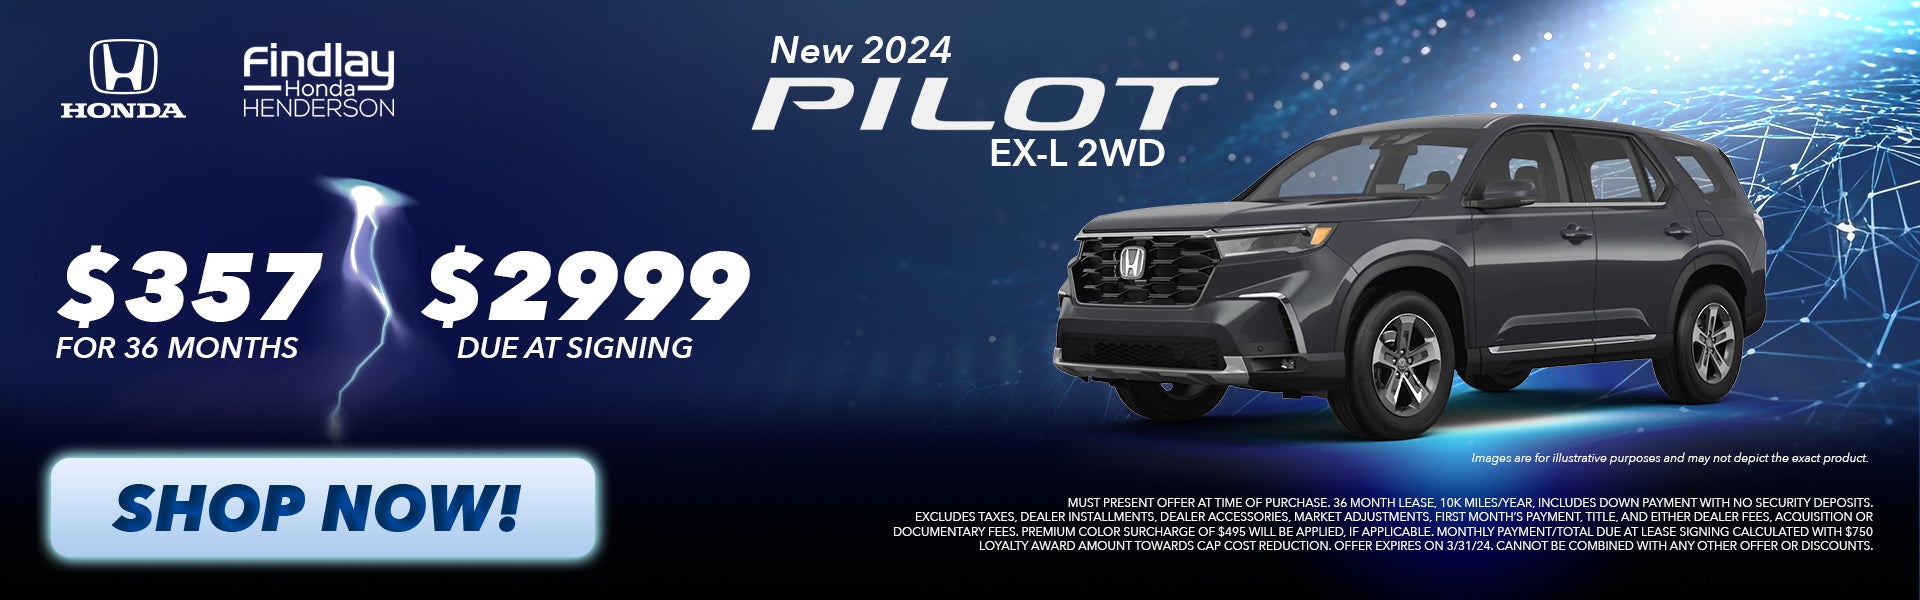 2024 Pilot 2WD